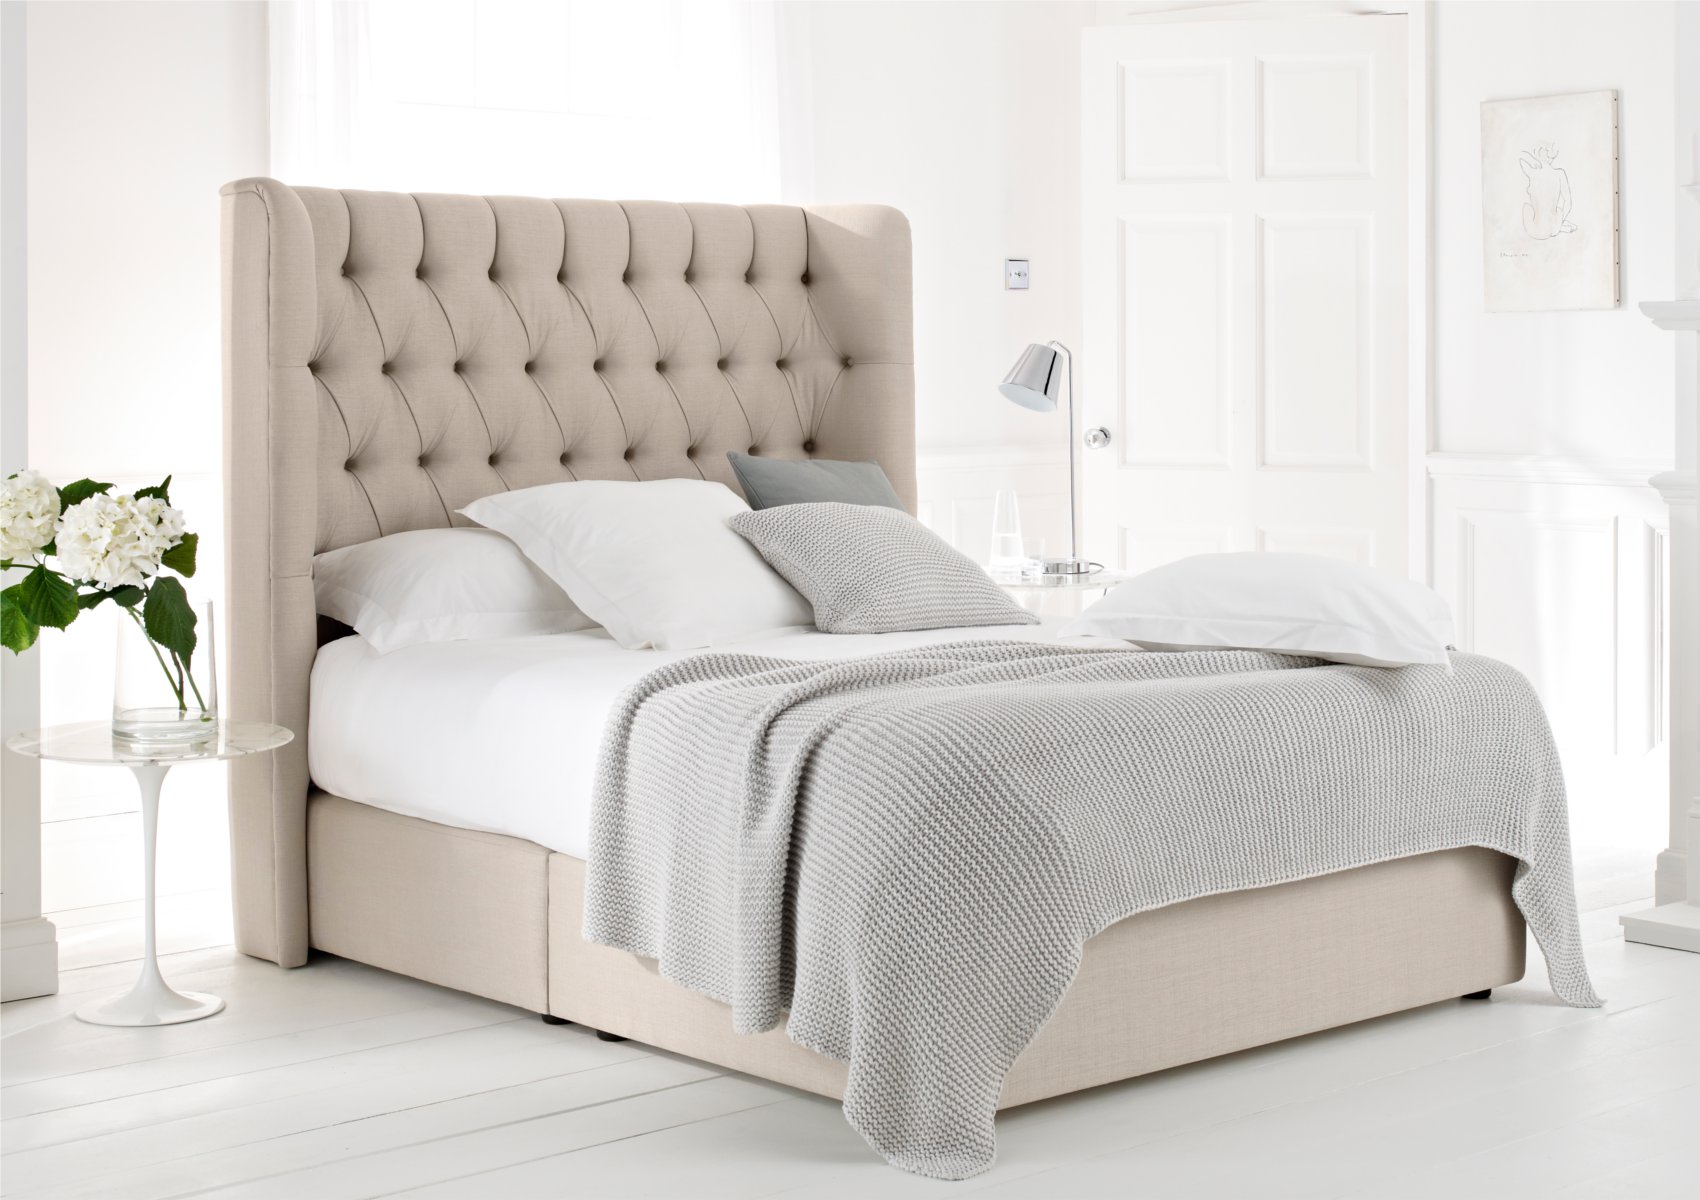 View Knightsbridge Finesse Malt Upholstered King Size Divan Bed Time4Sleep information